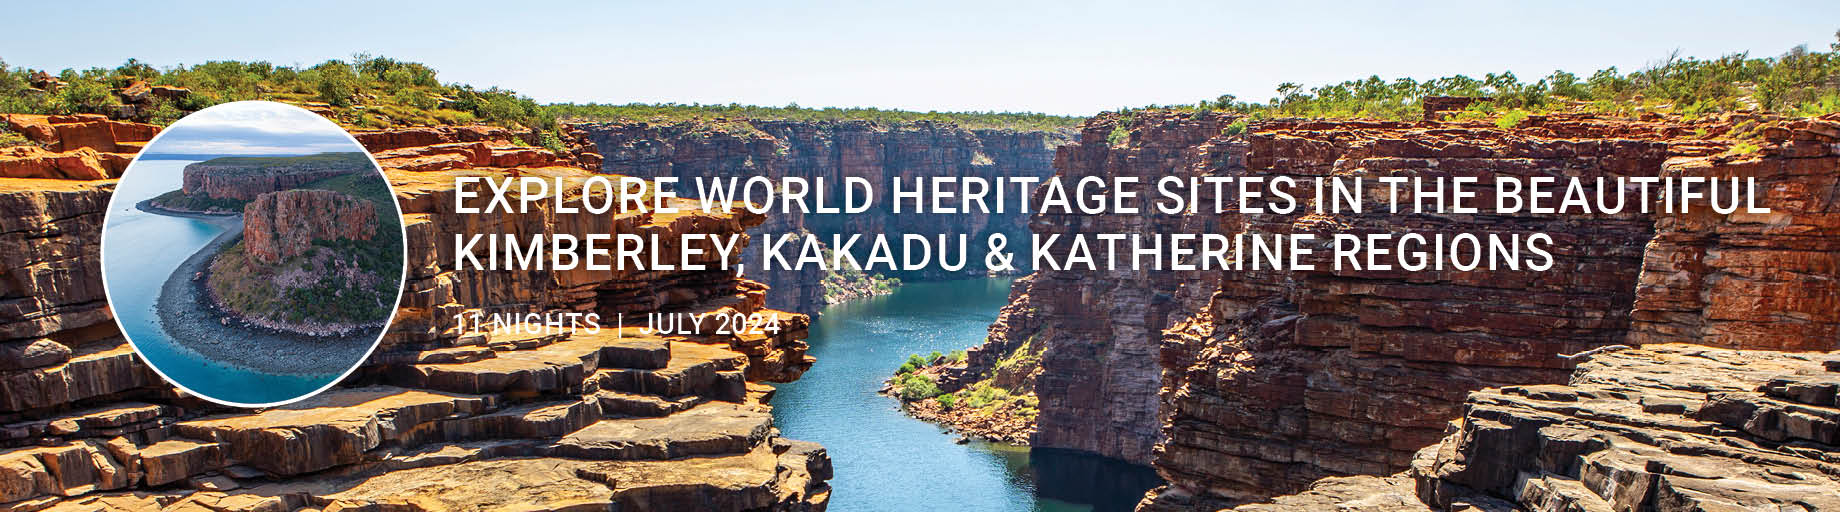 Exploration of The Kimberley, Kakadu & Katherine